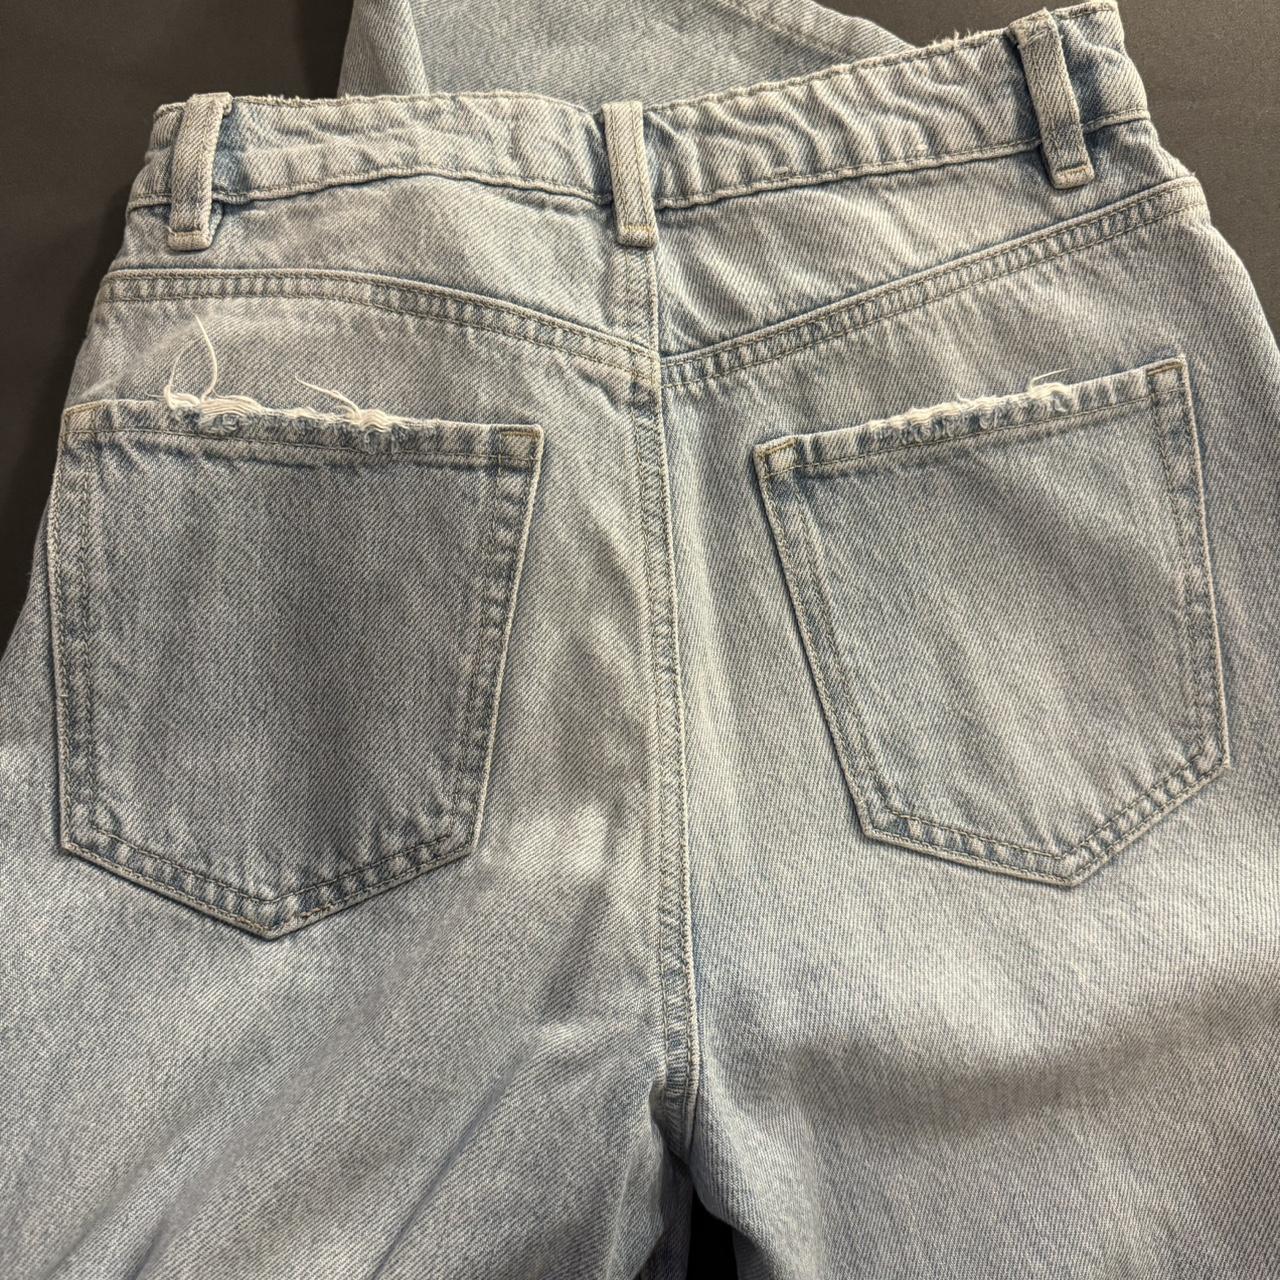 Wide Leg Jeans 👖 Size 01 waist 25 from garage,... - Depop